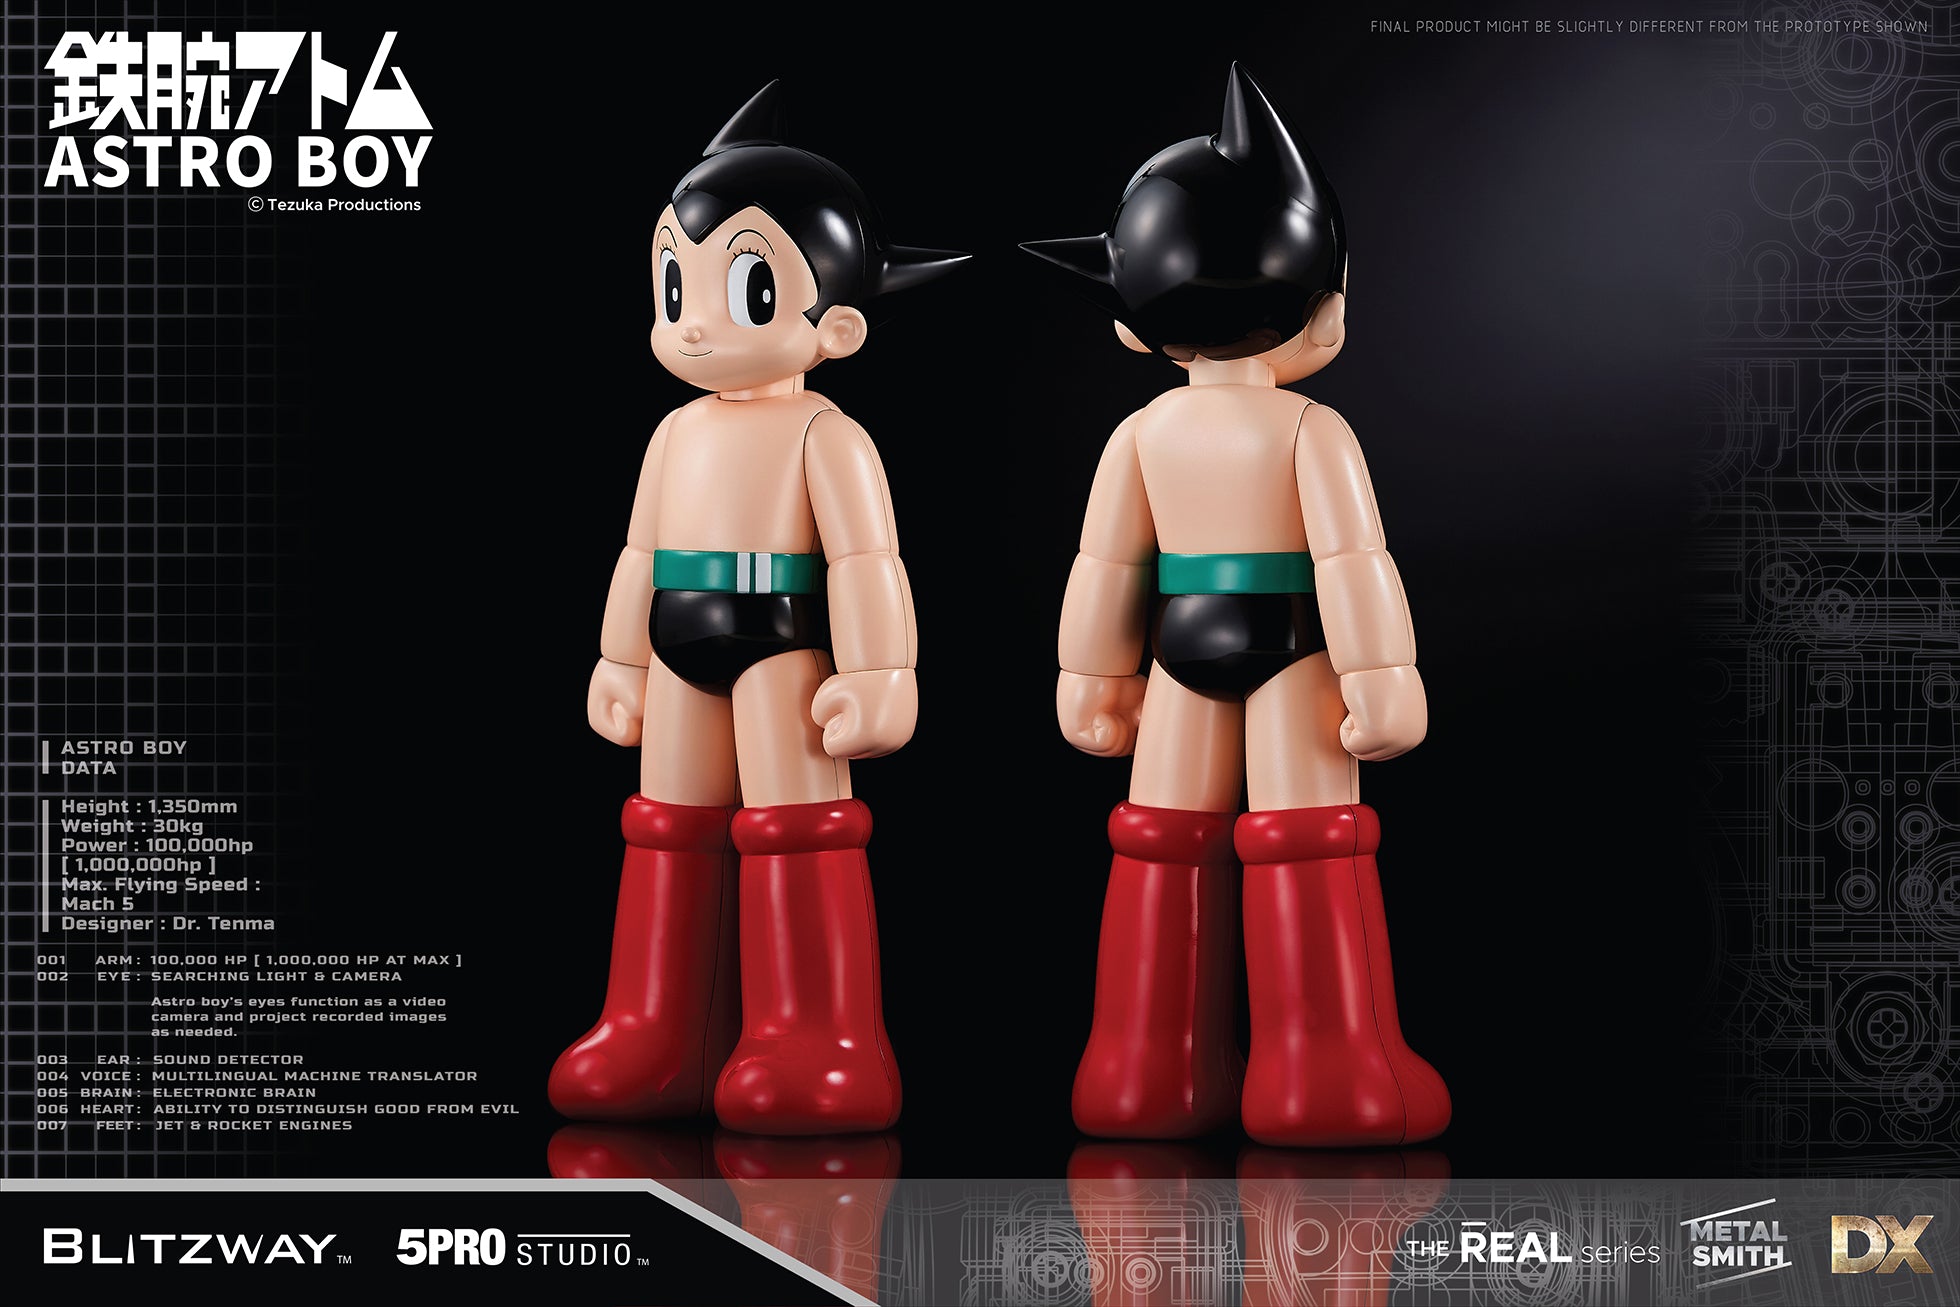 5Pro Studio - The Real Series - Astro Boy (DX Ver.) - Marvelous Toys